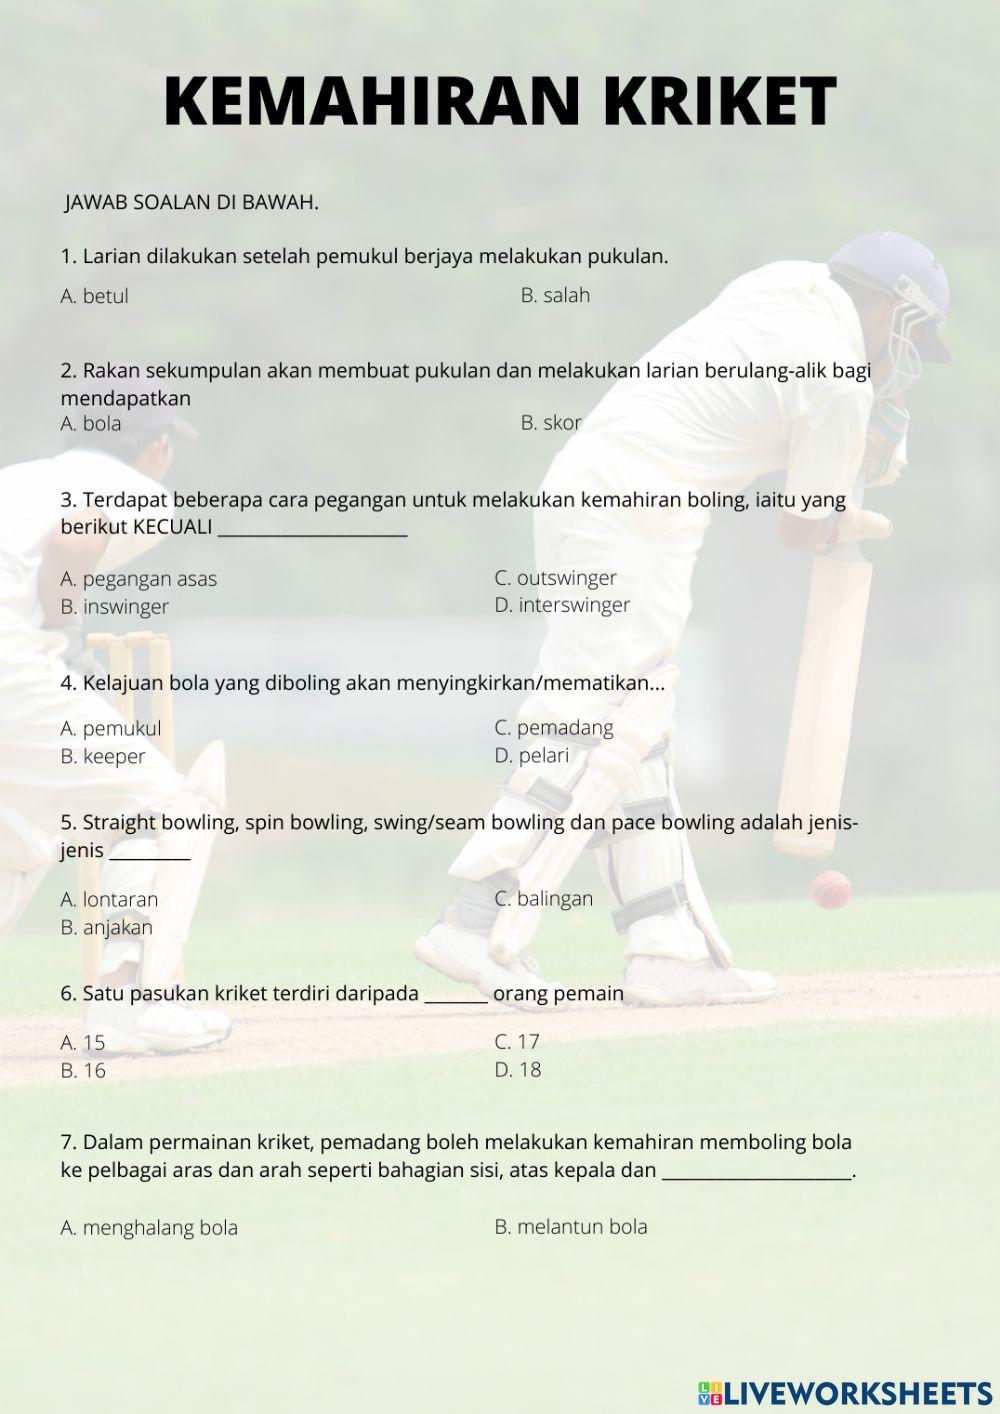 Kemahiran kriket